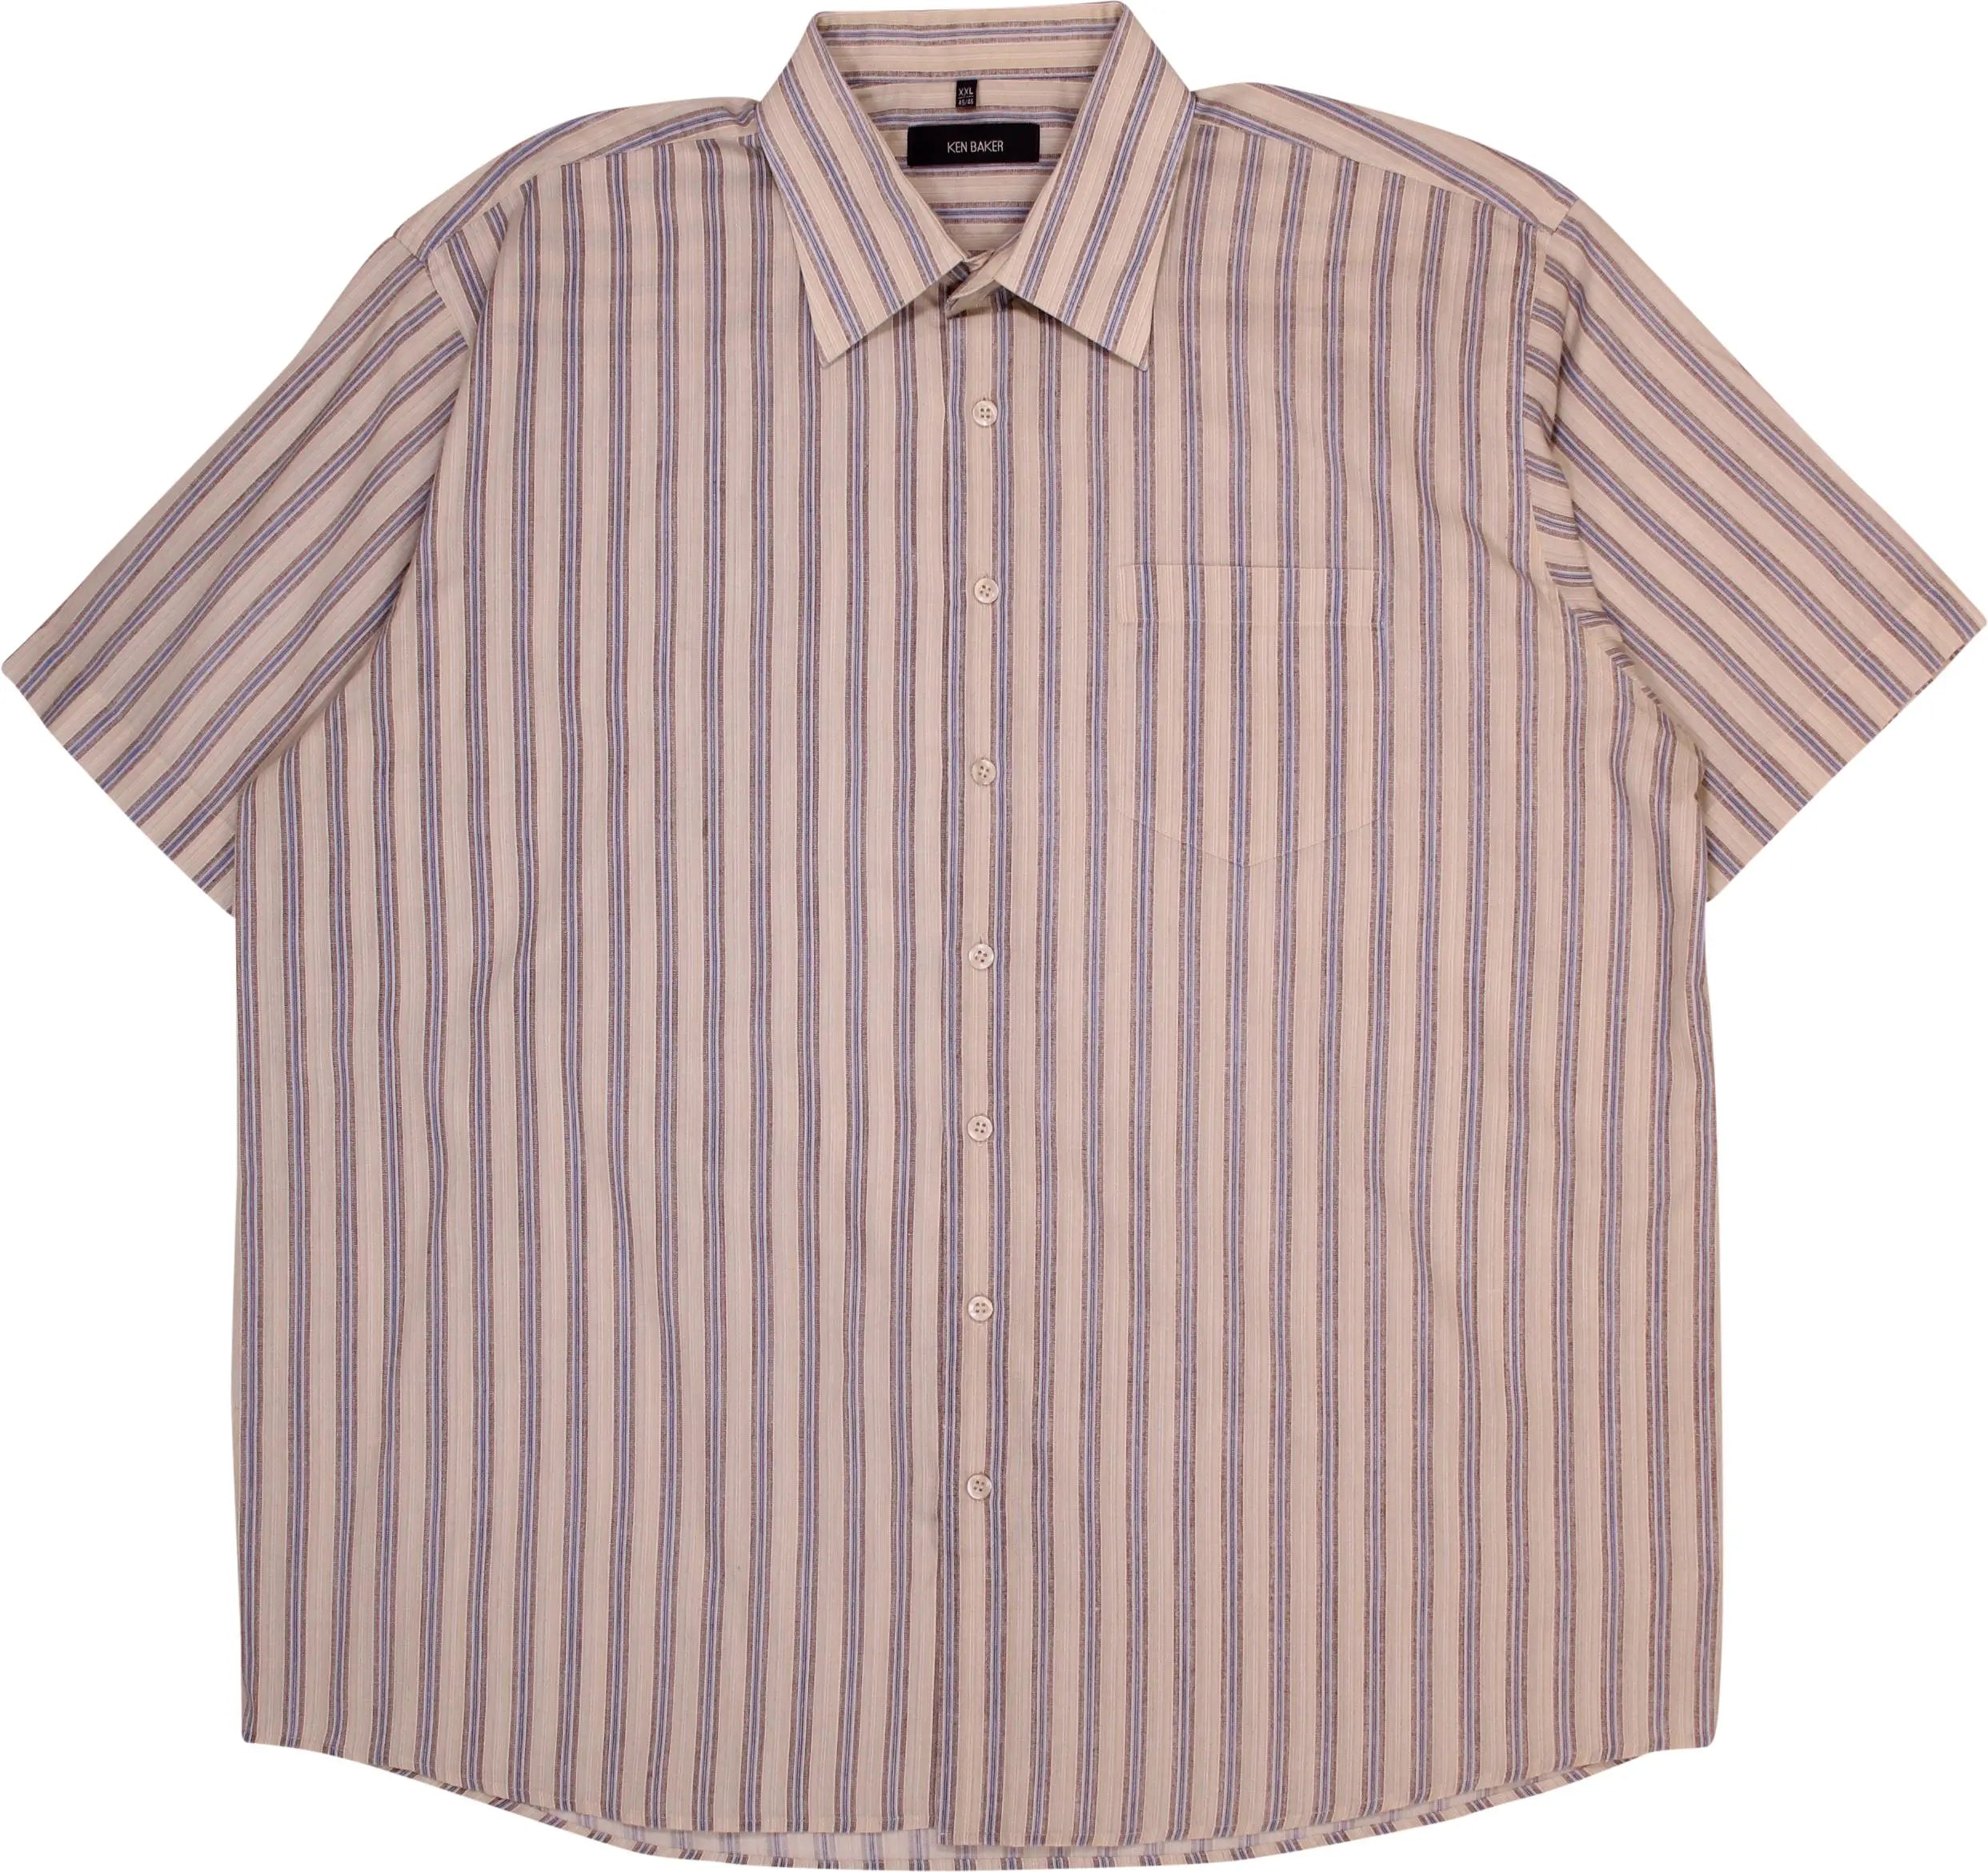 Ken Baker - Striped Short Sleeve Shirt- ThriftTale.com - Vintage and second handclothing